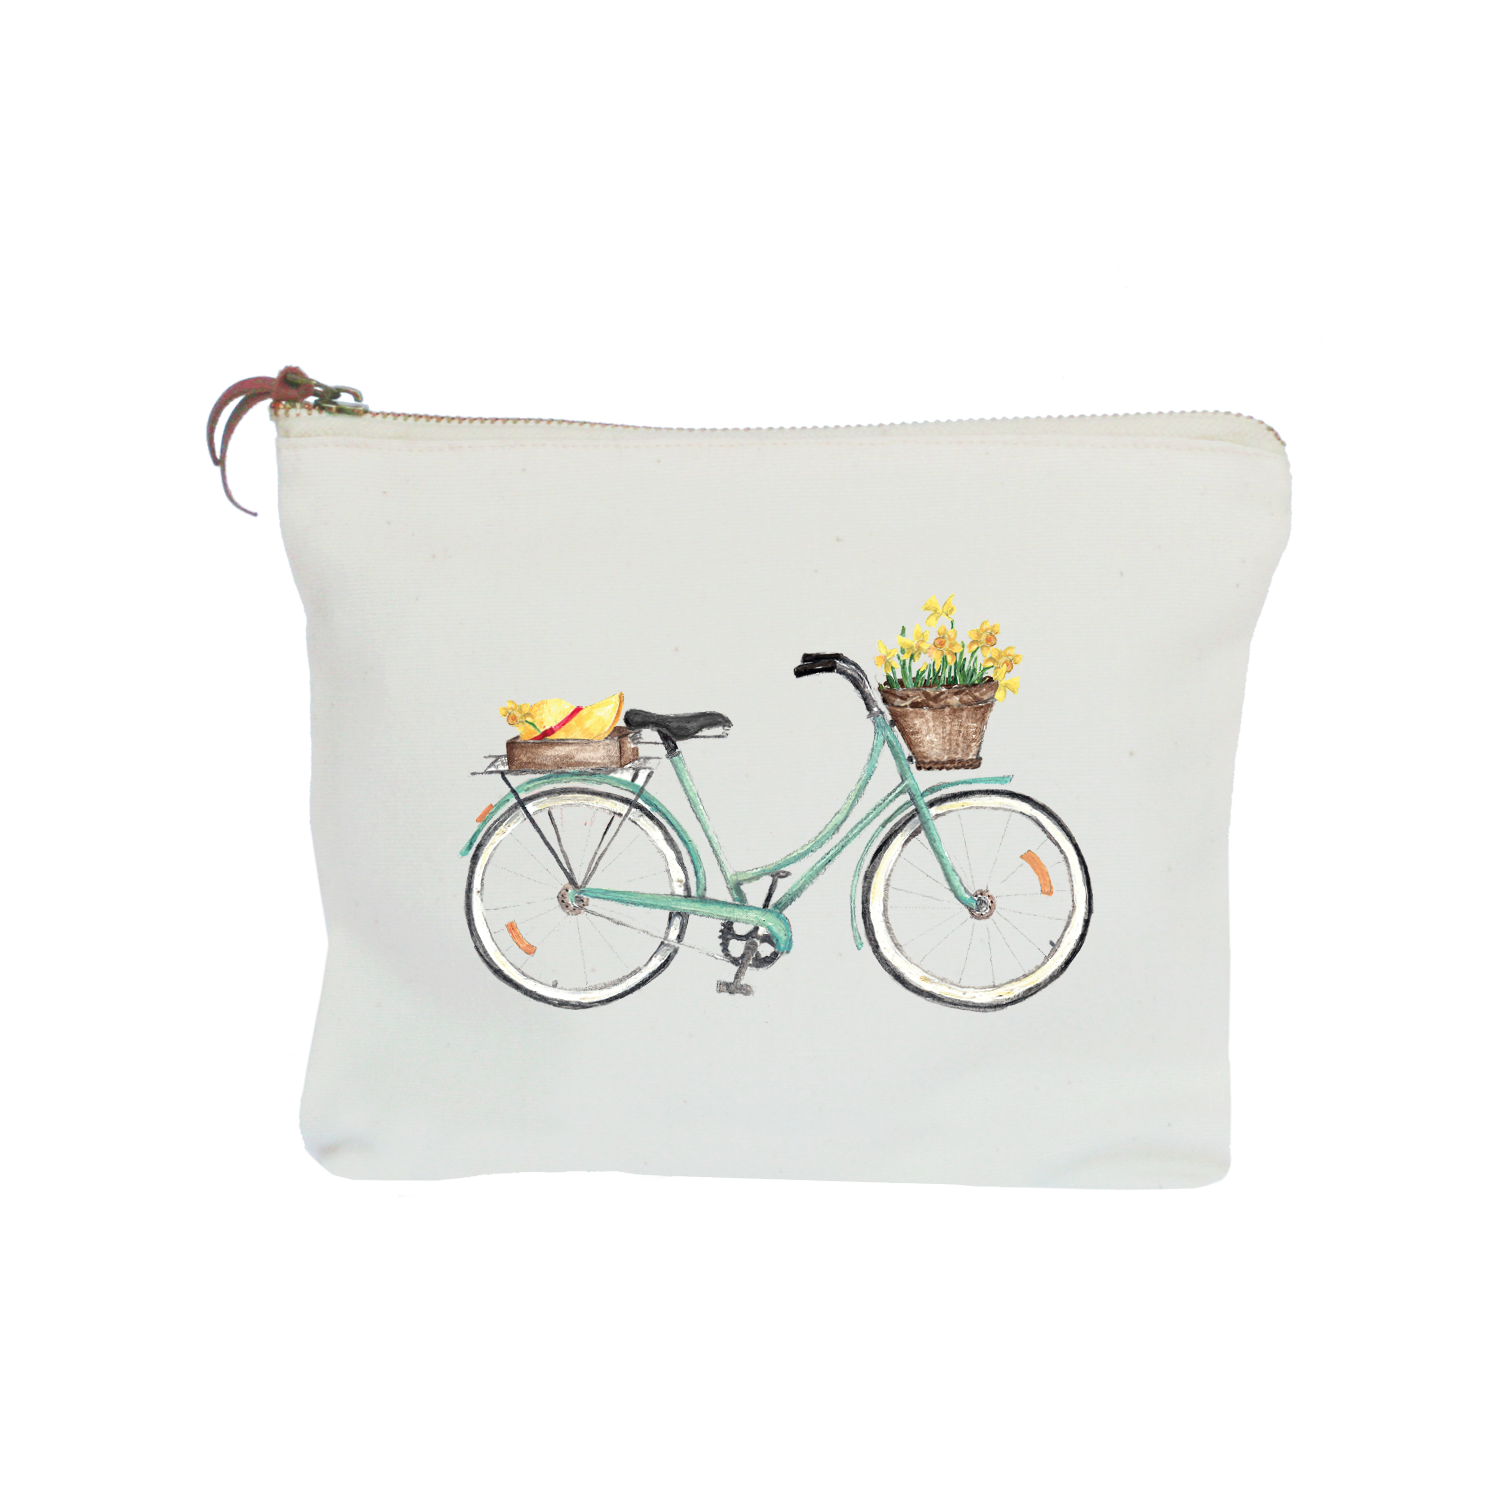 seafoam bike with daffodils and straw hat zipper pouch